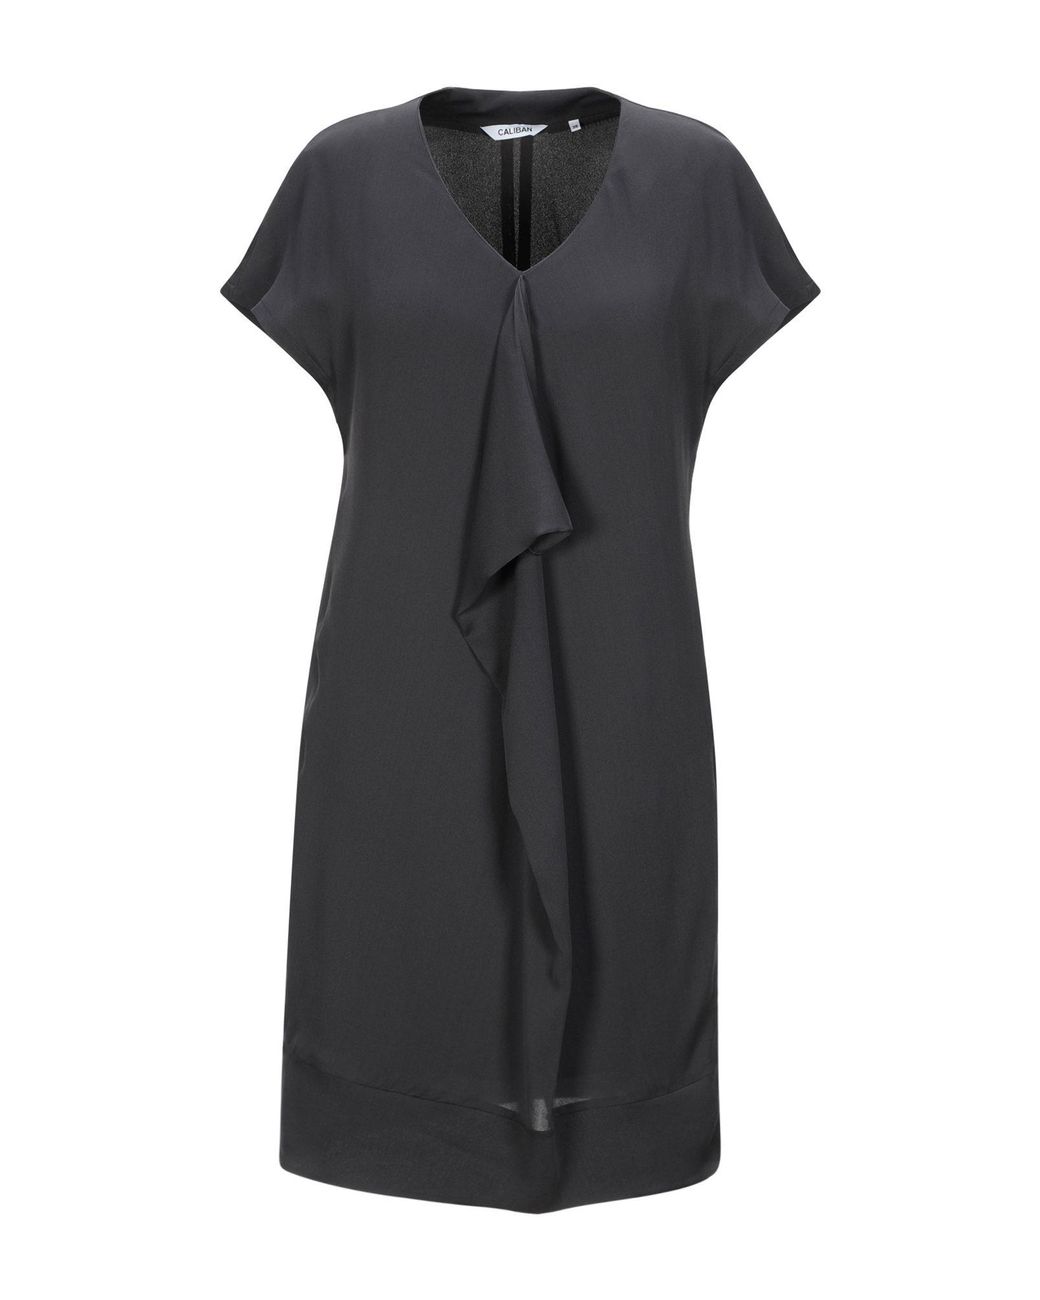 Caliban Silk Short Dress in Lead (Gray) - Lyst